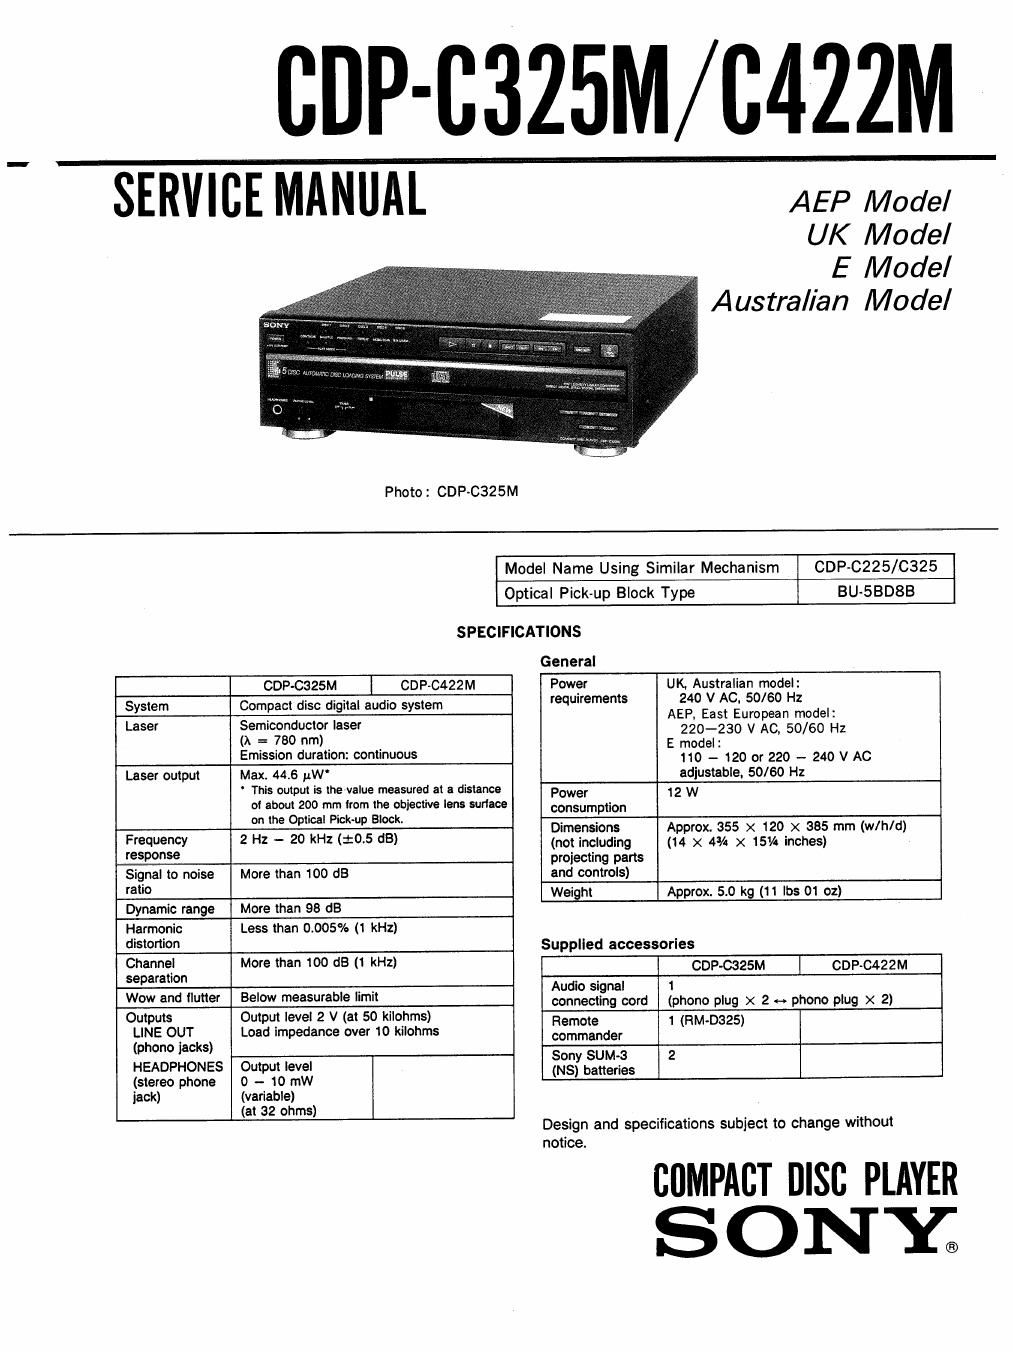 sony cdp c 422 m service manual